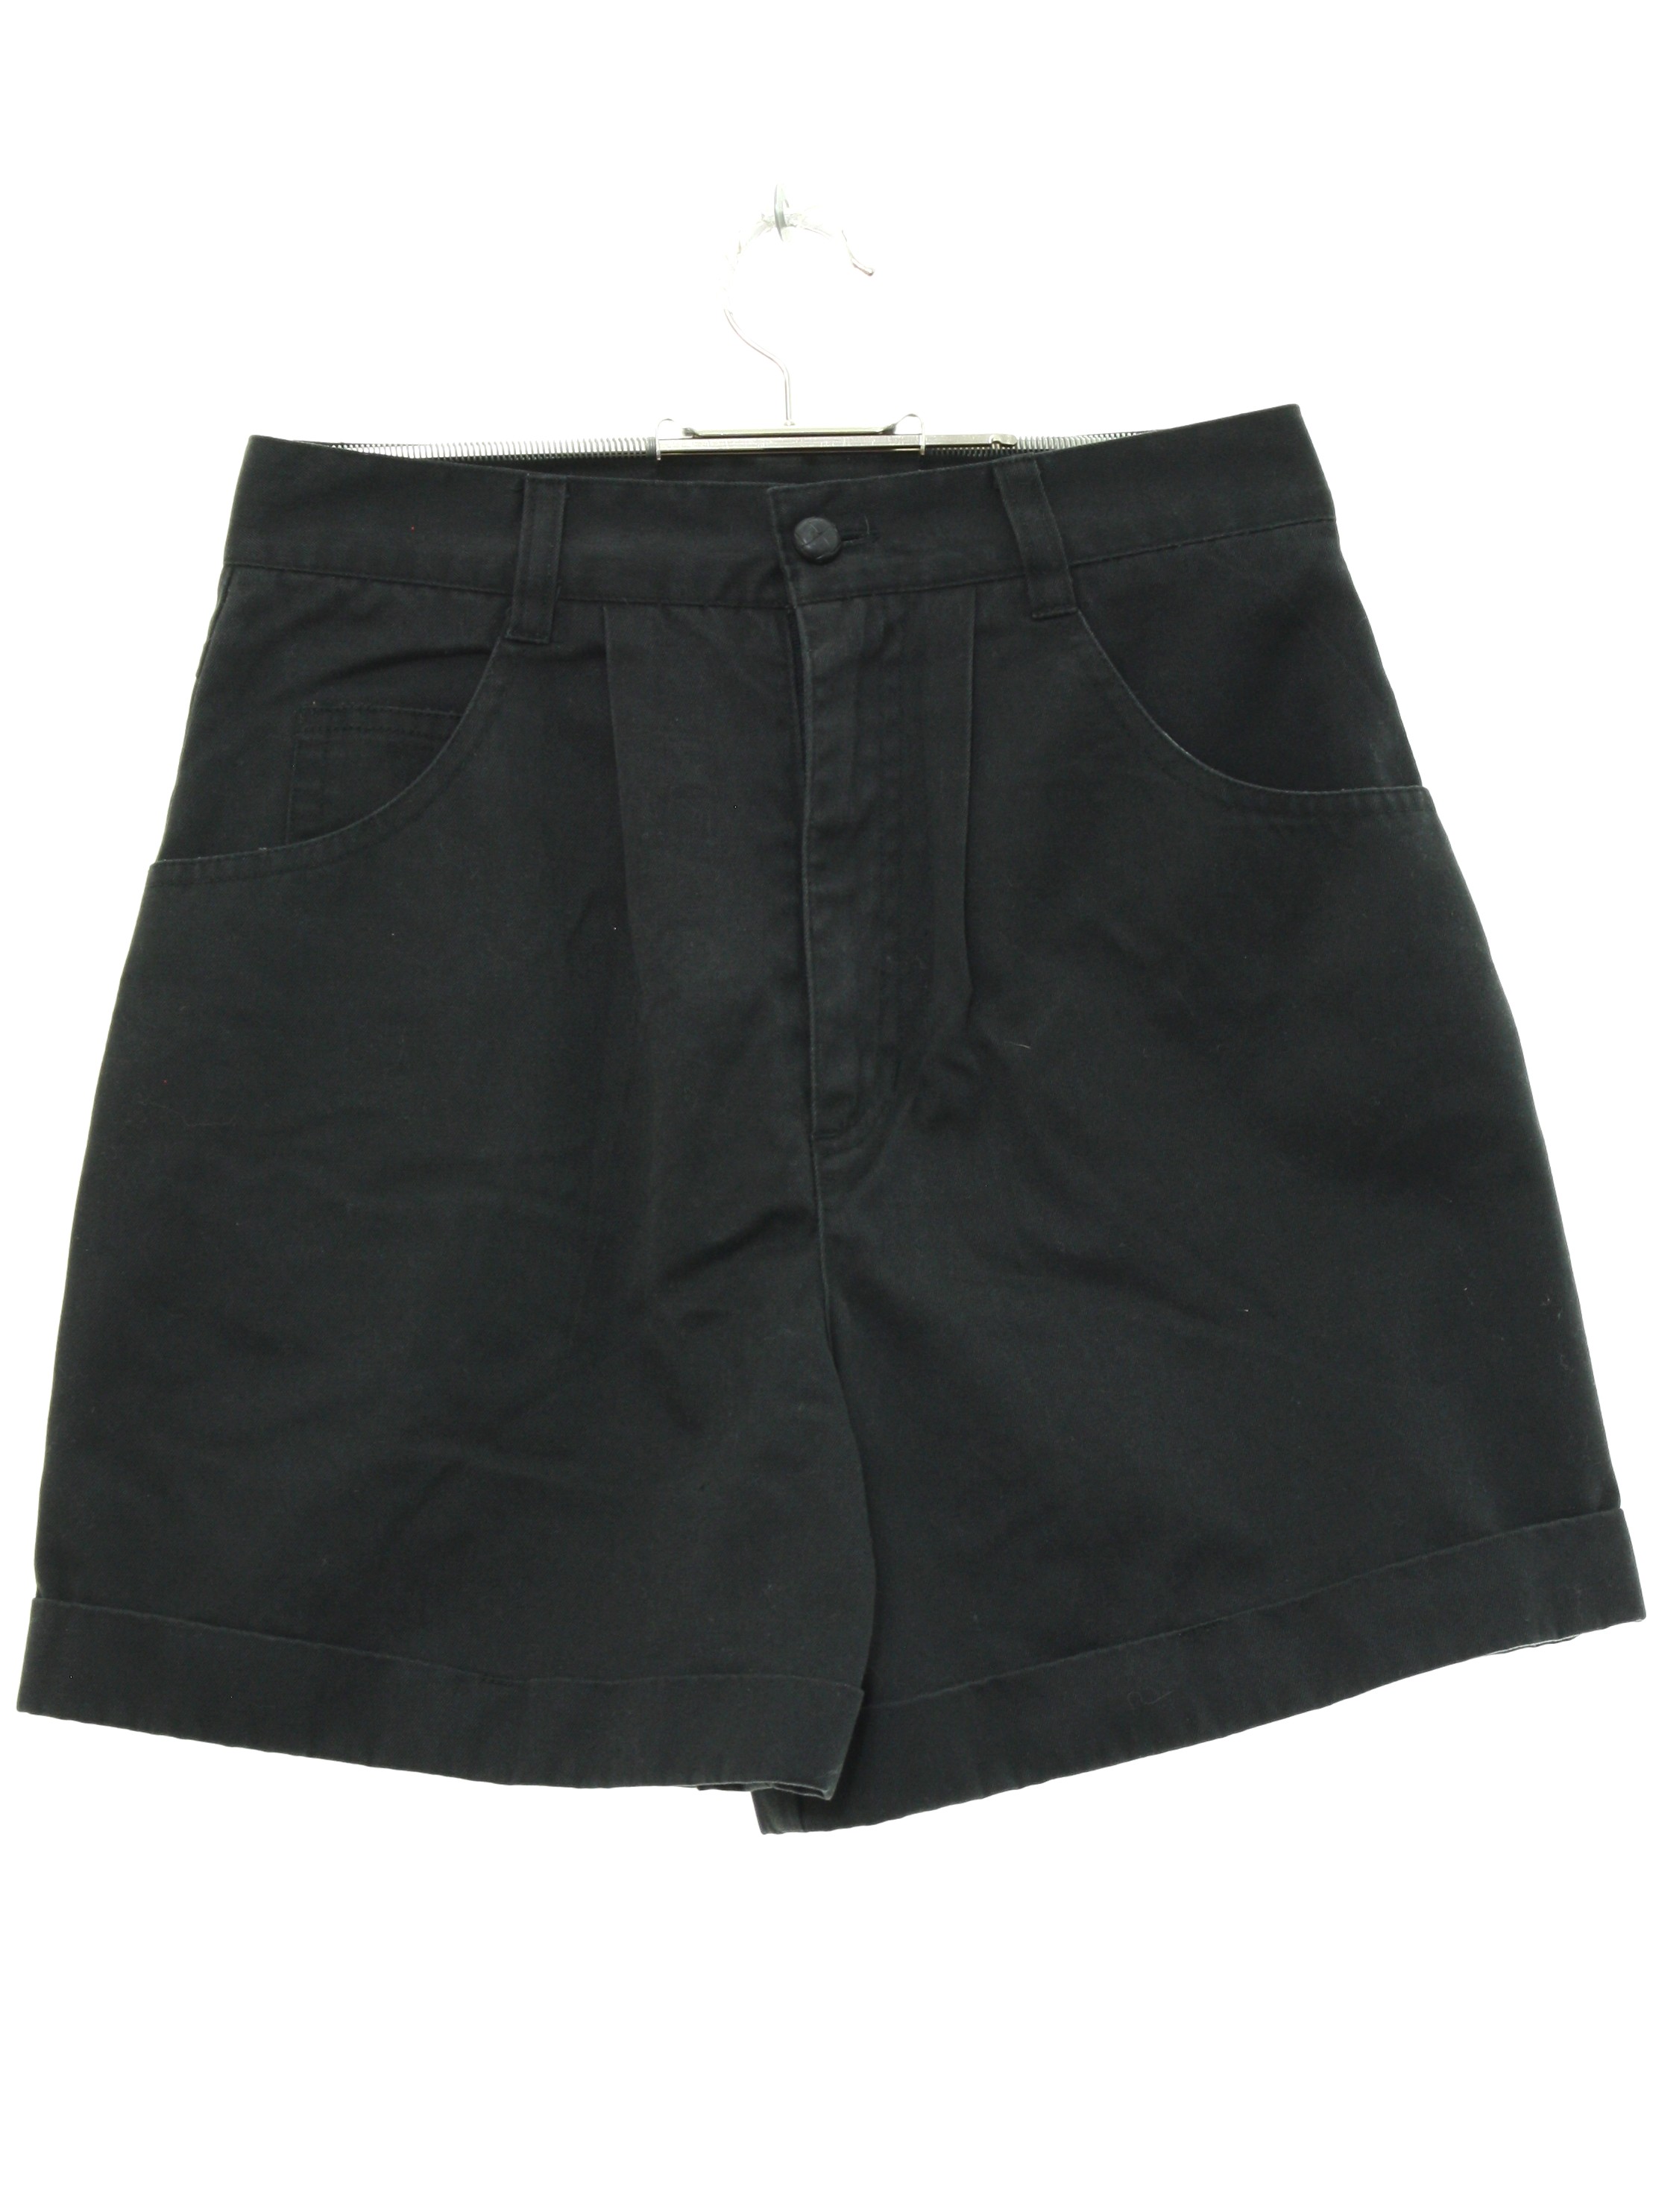 Vintage 90s Shorts: 90s -No Label- Womens black background cotton ...